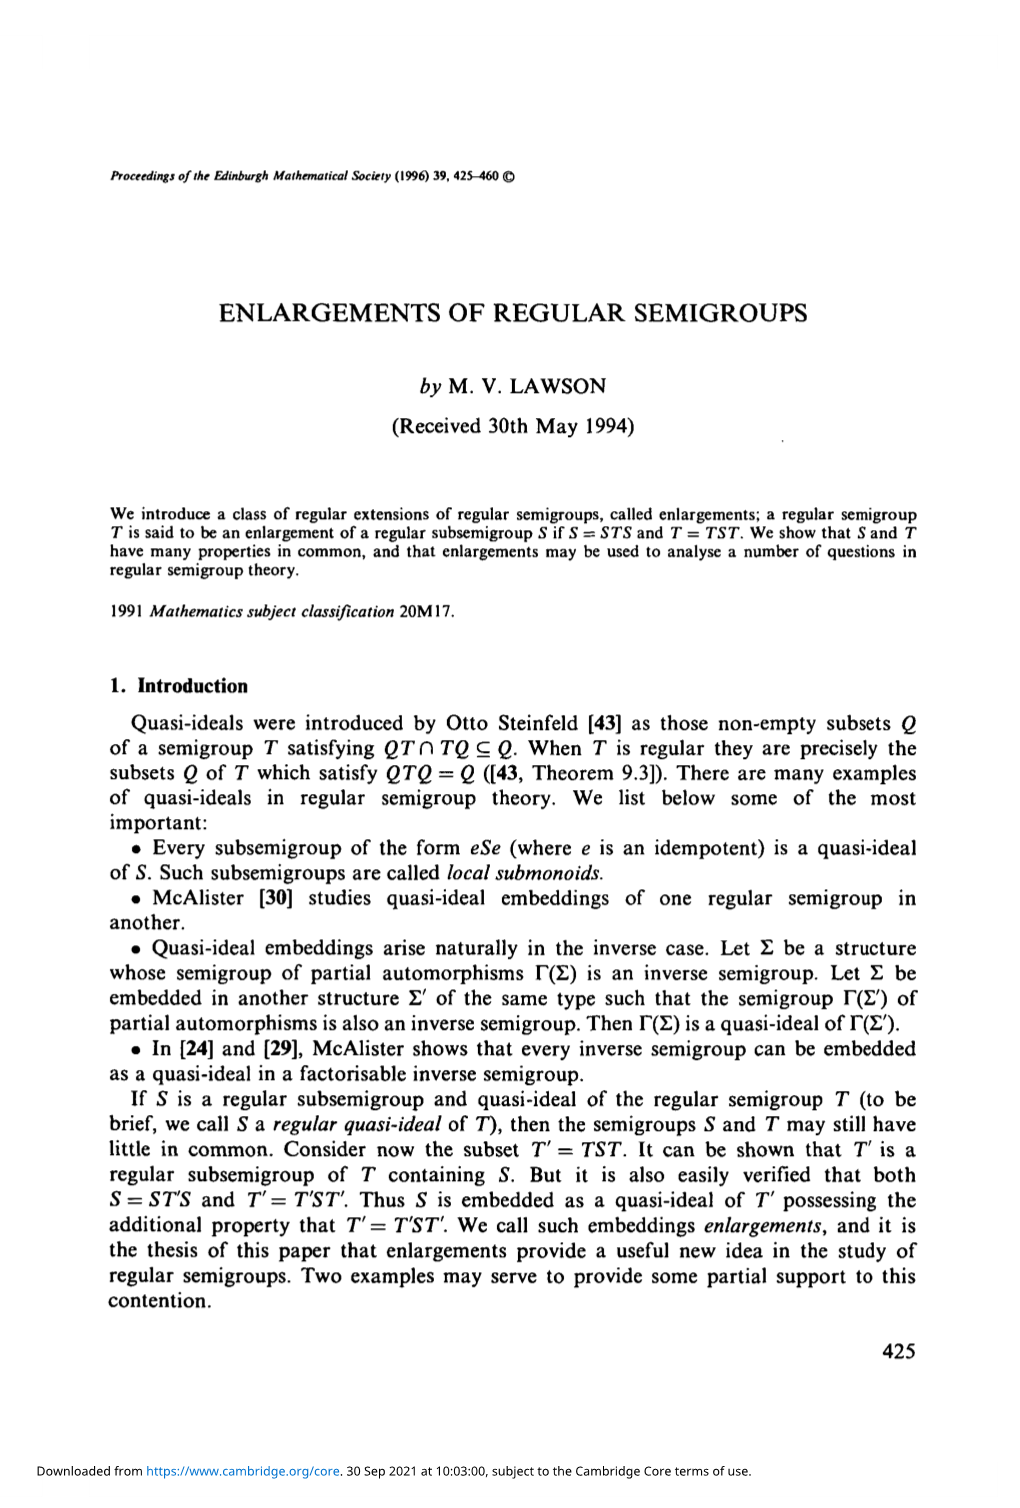 Enlargements of Regular Semigroups